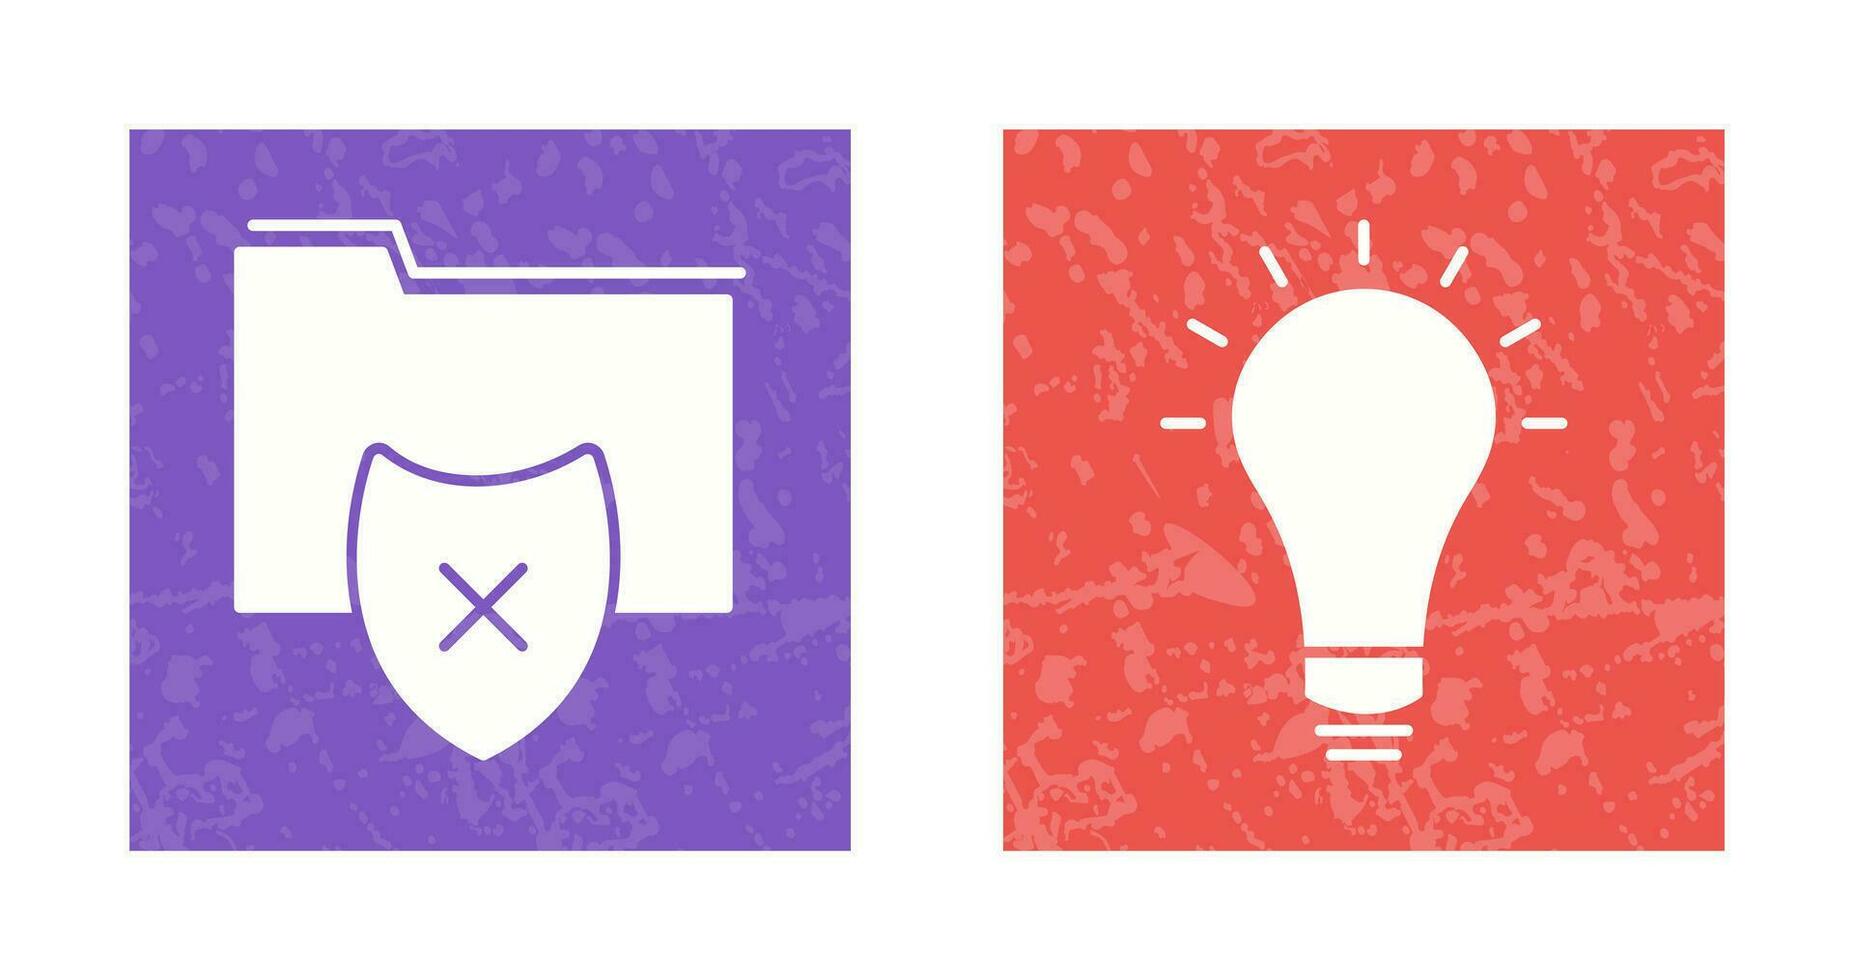 vulnerable folders and innovatives idea Icon vector